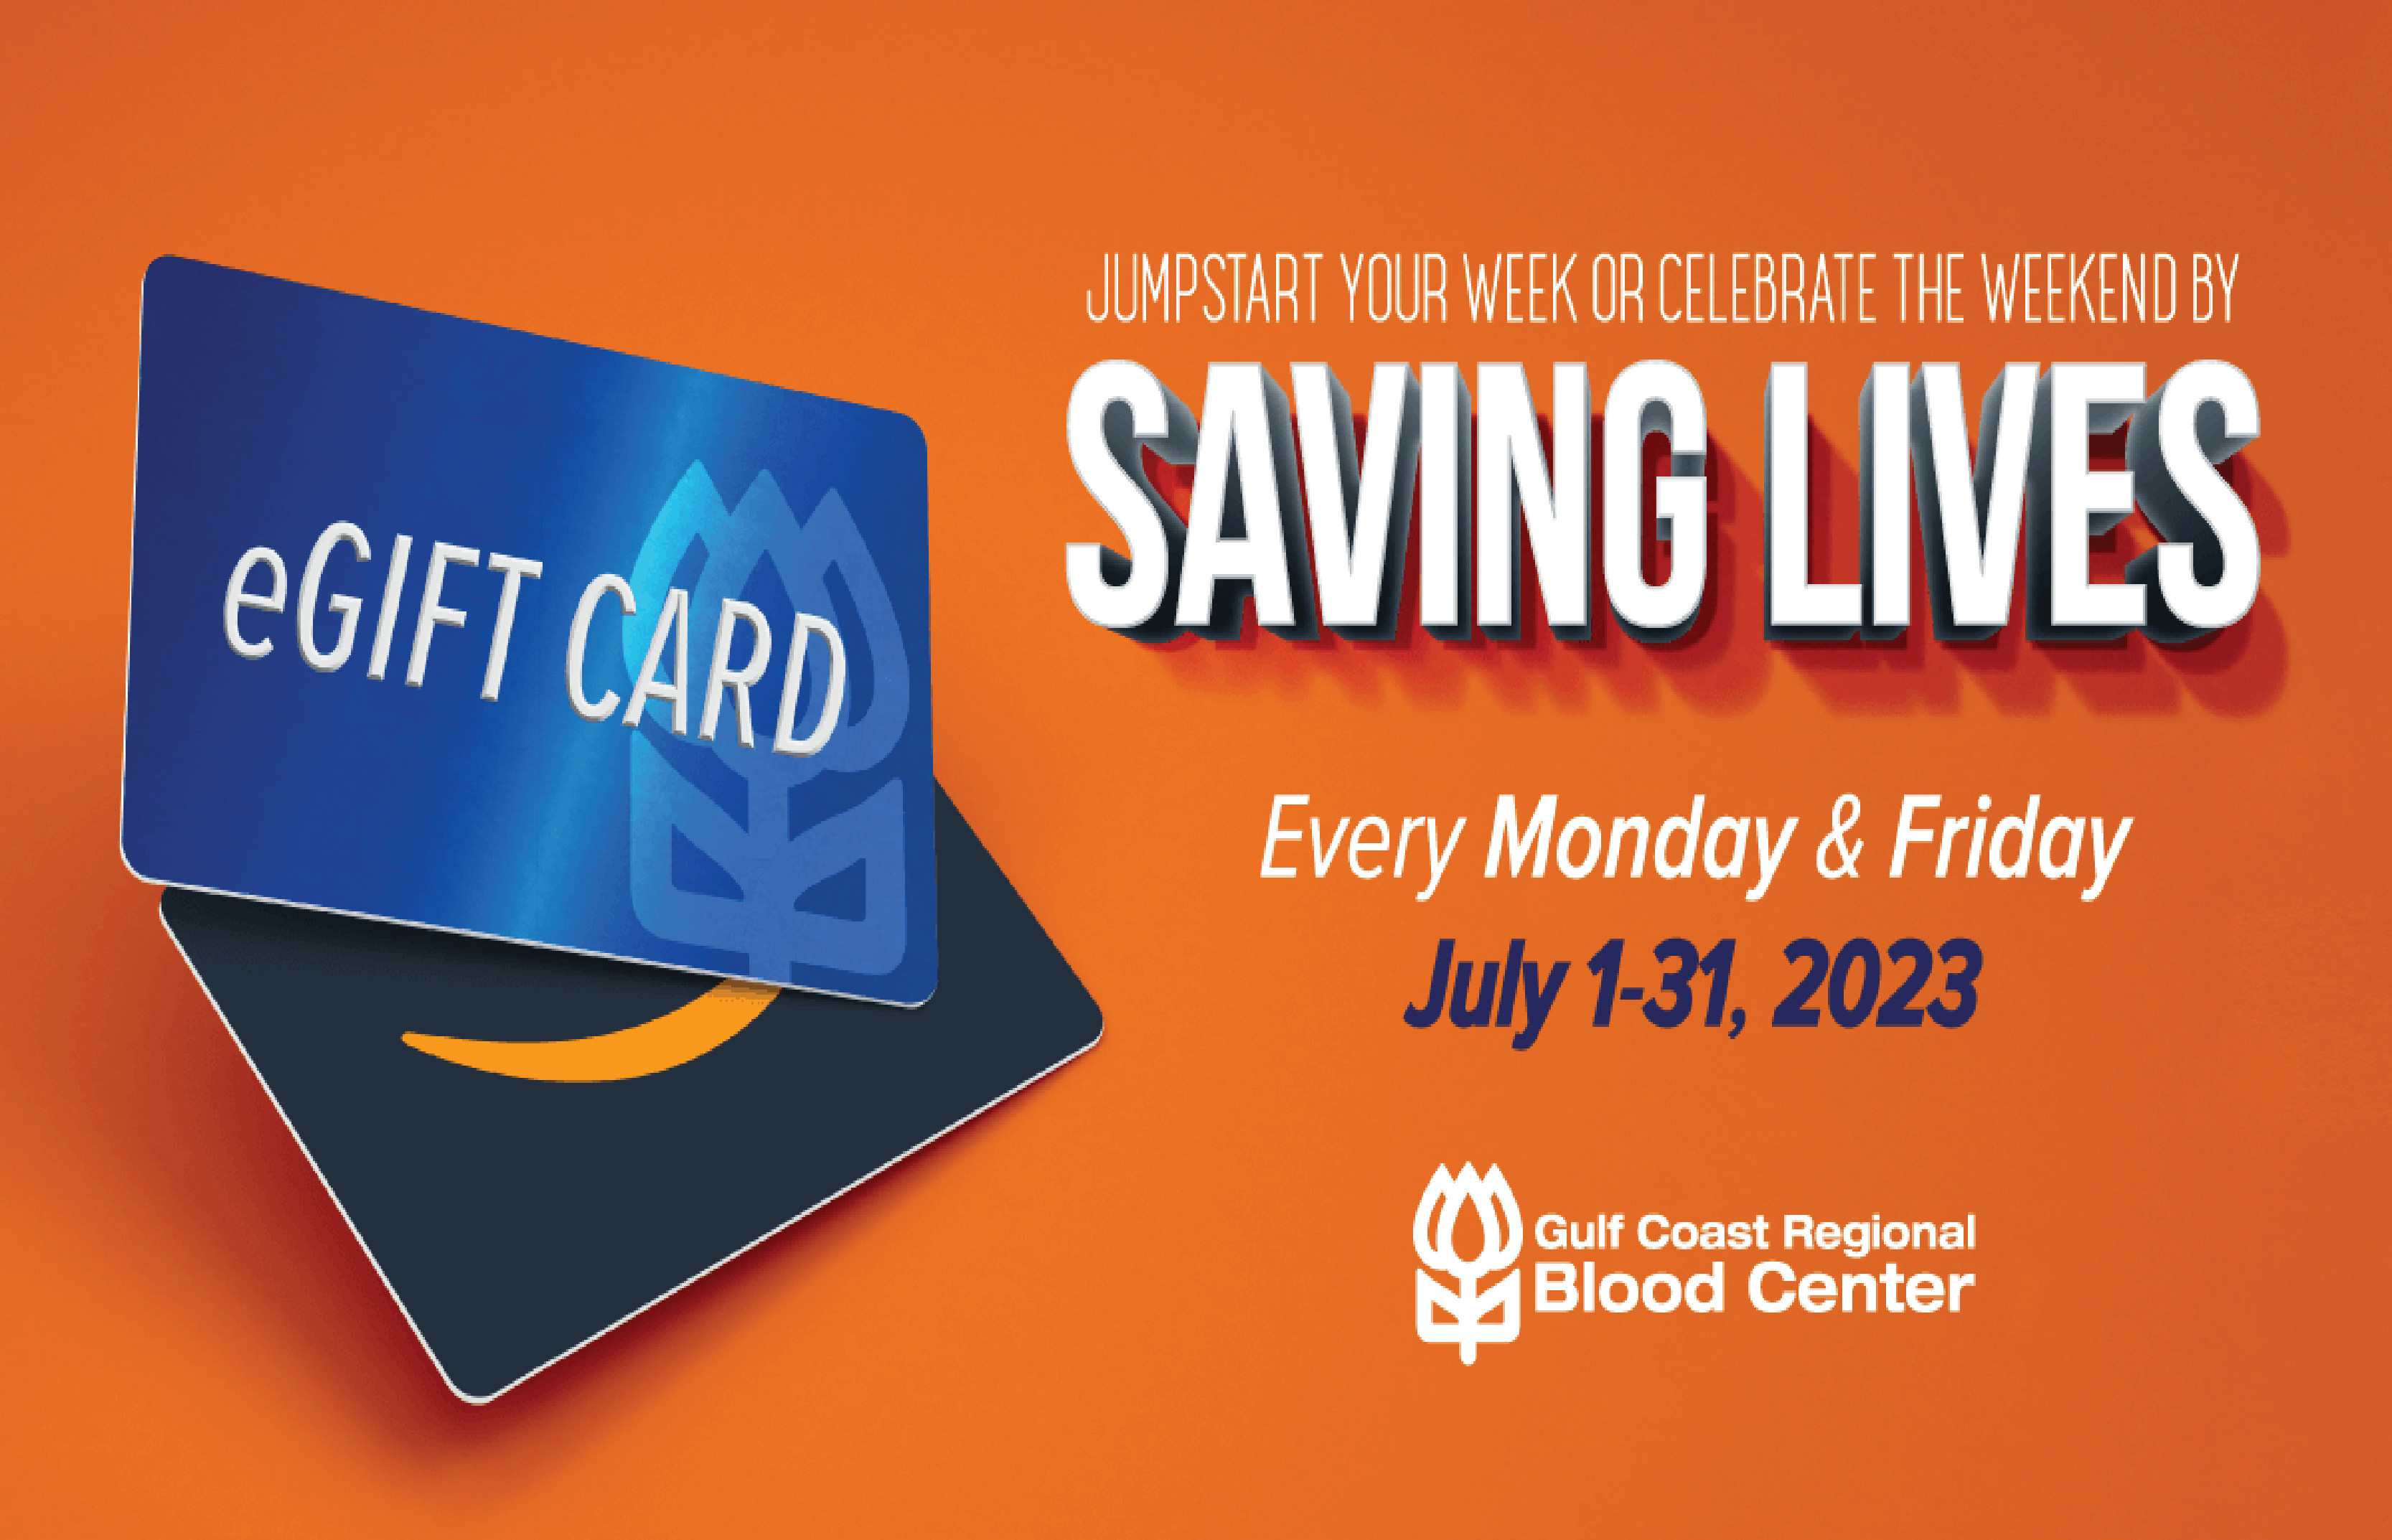 Save Lives, Get an eGift Card with Gulf Coast Regional Blood Center